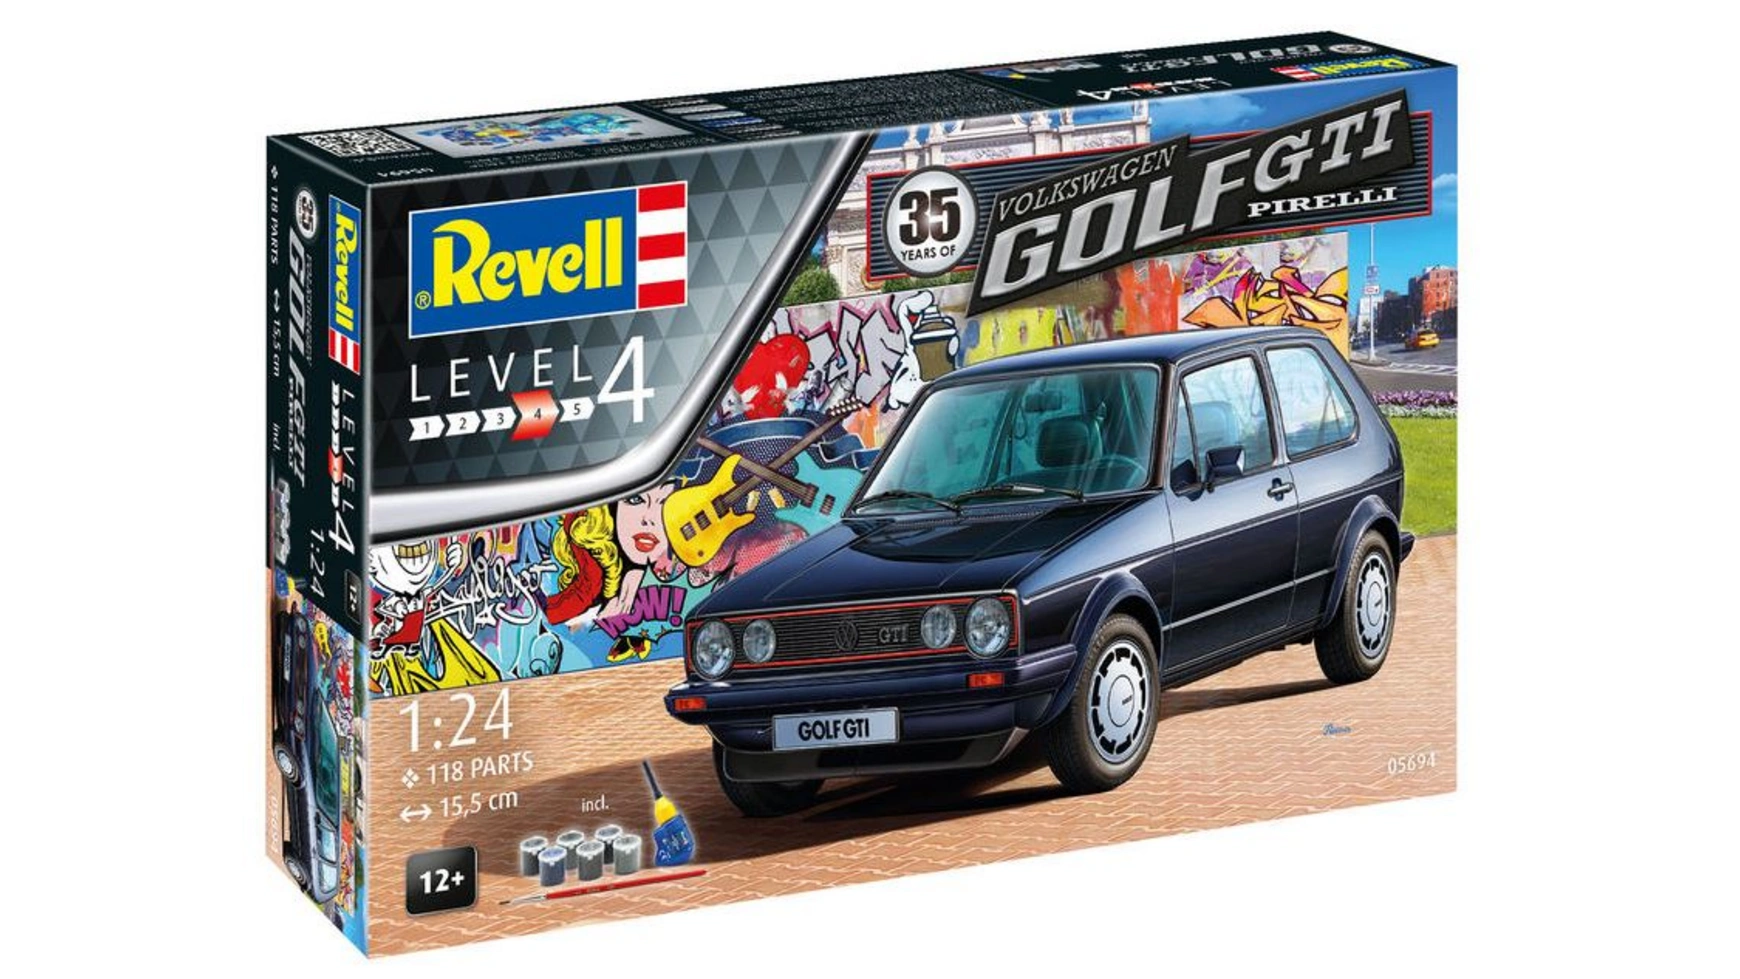 цена Revell Подарочный набор Volkswagen Golf GTI Pirelli на 35 лет